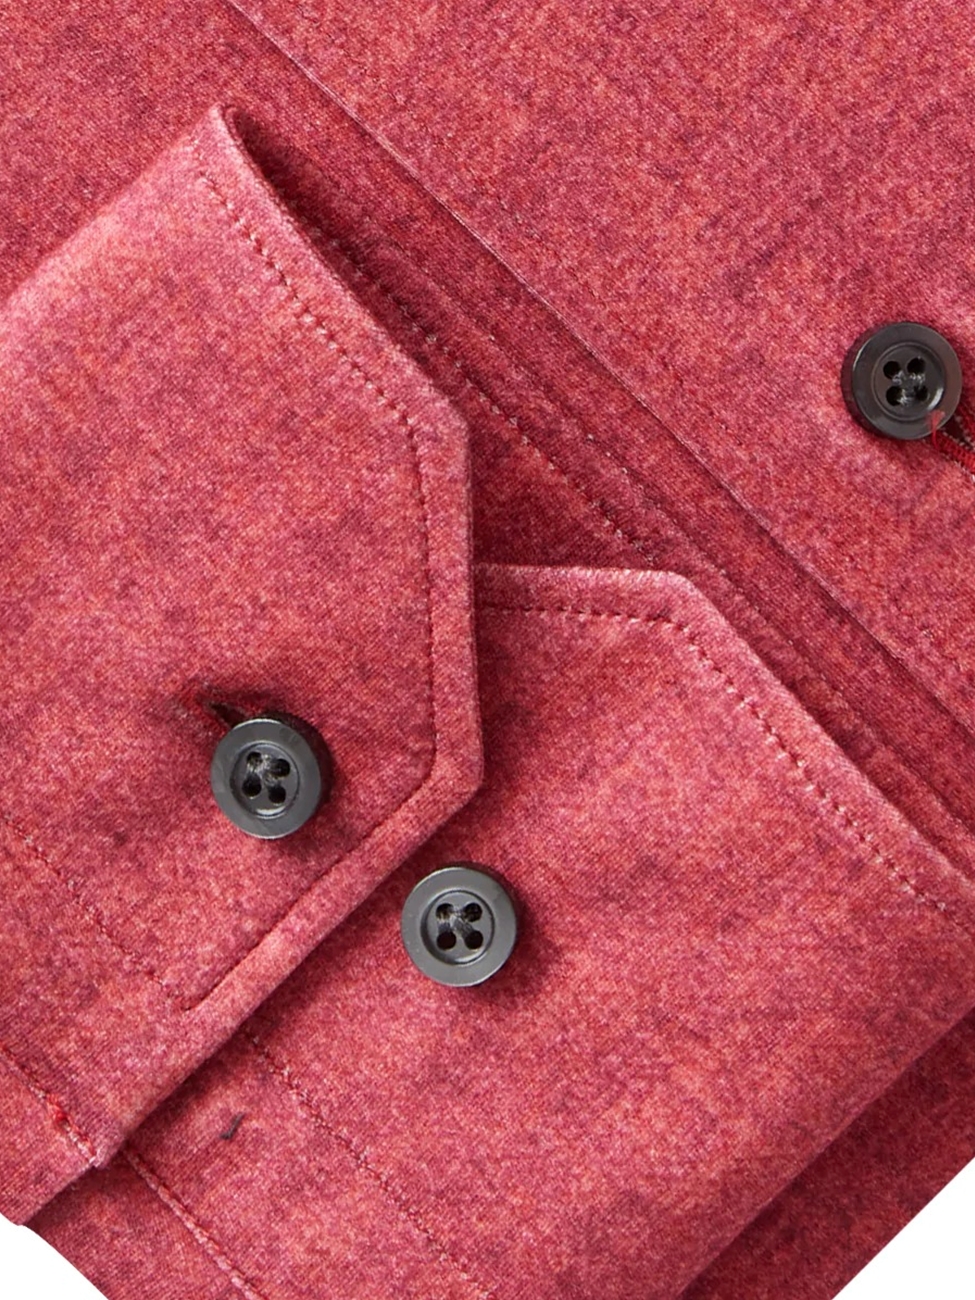 Red Solid Modern 4Flex Stretch Knit Men Shirt | Emanuel Berg Shirts | Sam's  Tailoring Fine Men Clothing